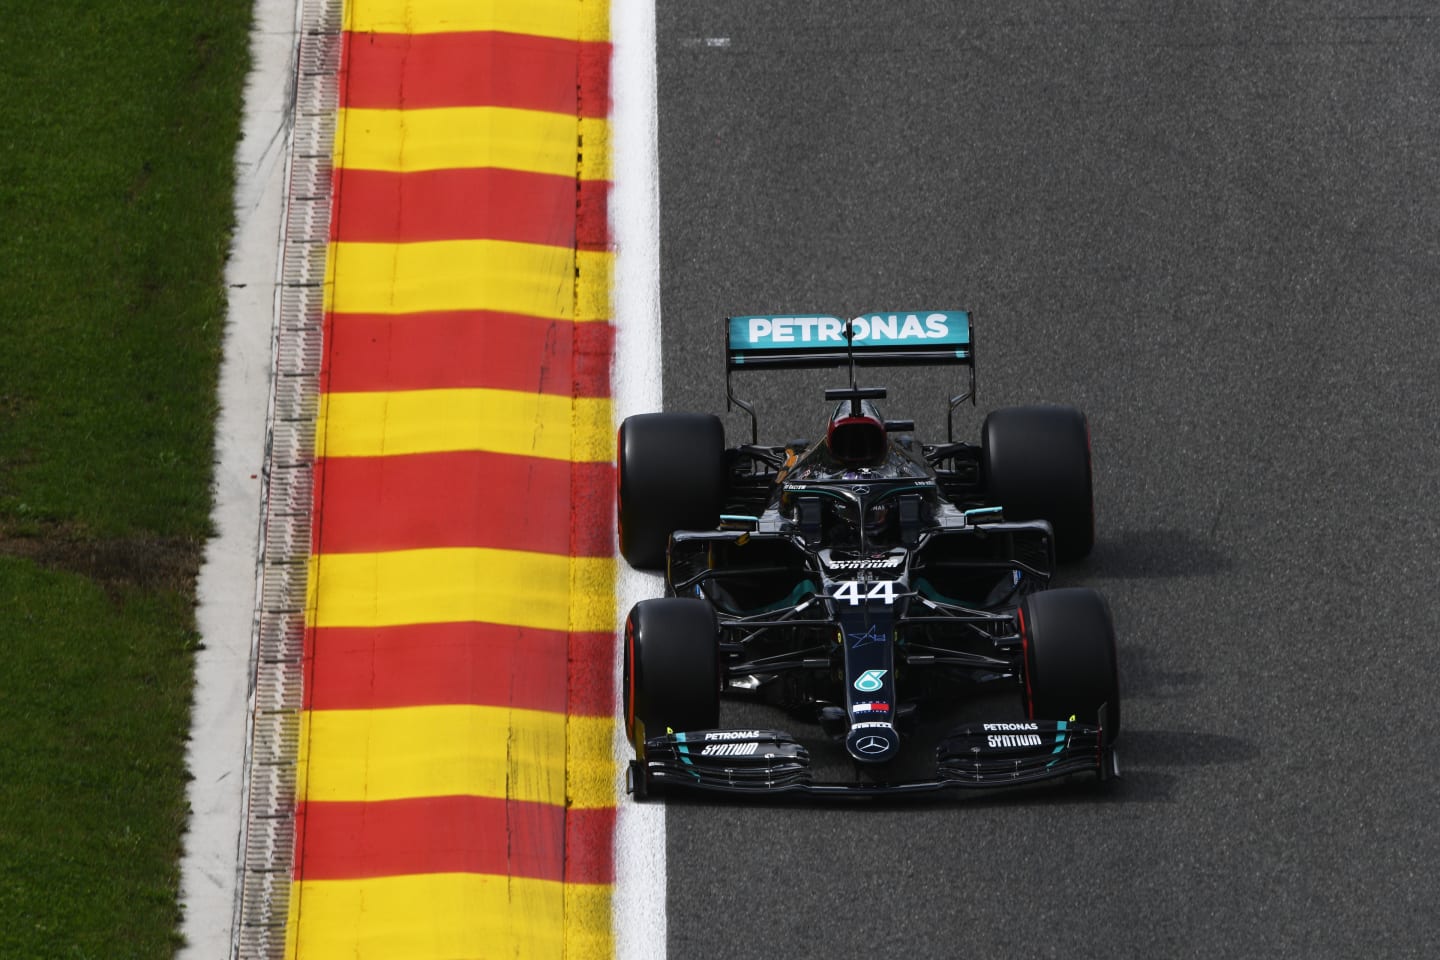 SPA, BELGIUM - AUGUST 29: Lewis Hamilton of Great Britain driving the (44) Mercedes AMG Petronas F1